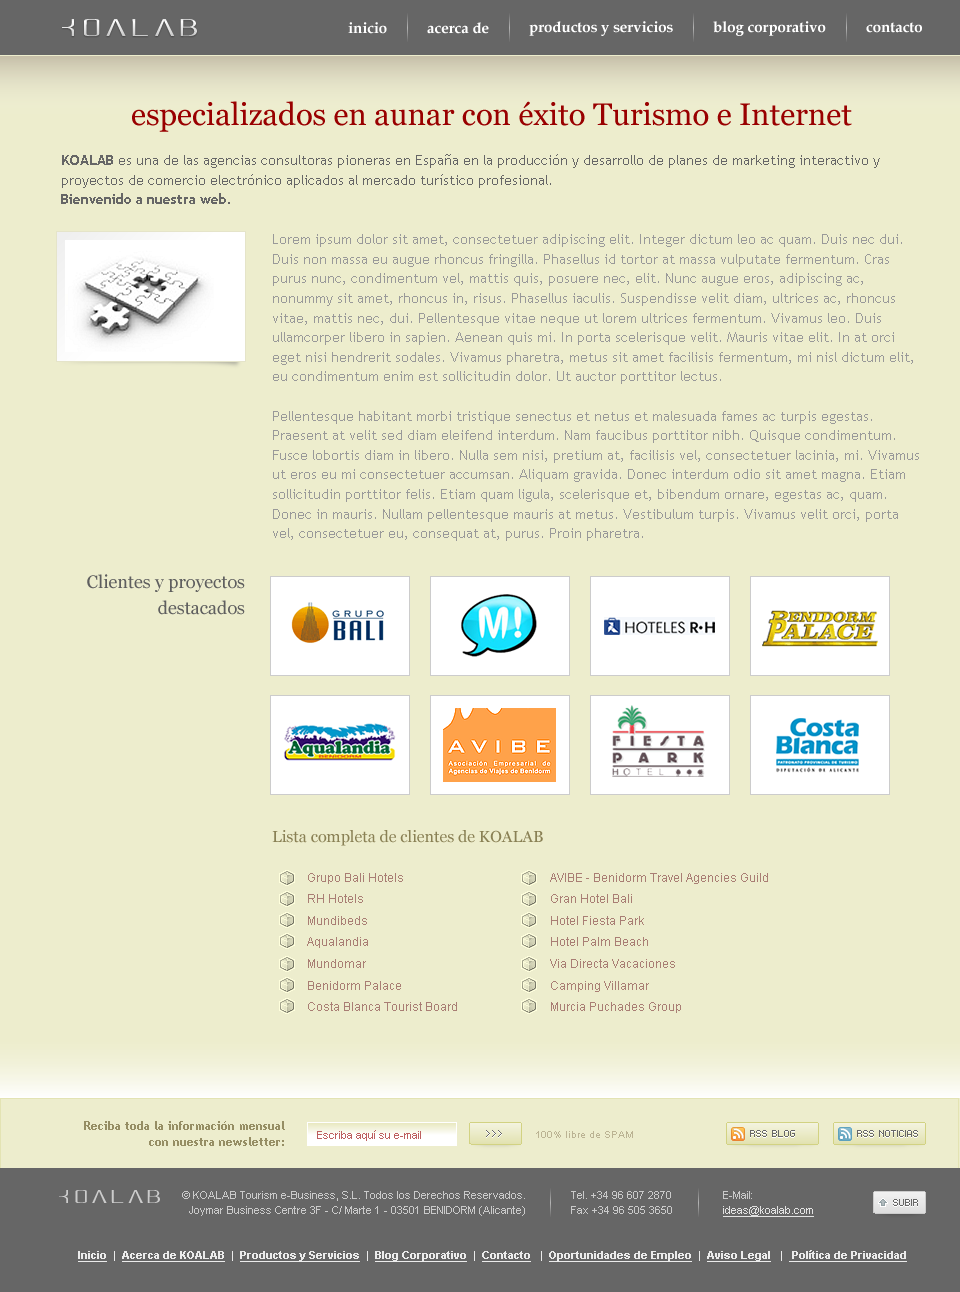 corporate website Asp.Net C# agency Blog tourism internet marketing Travel